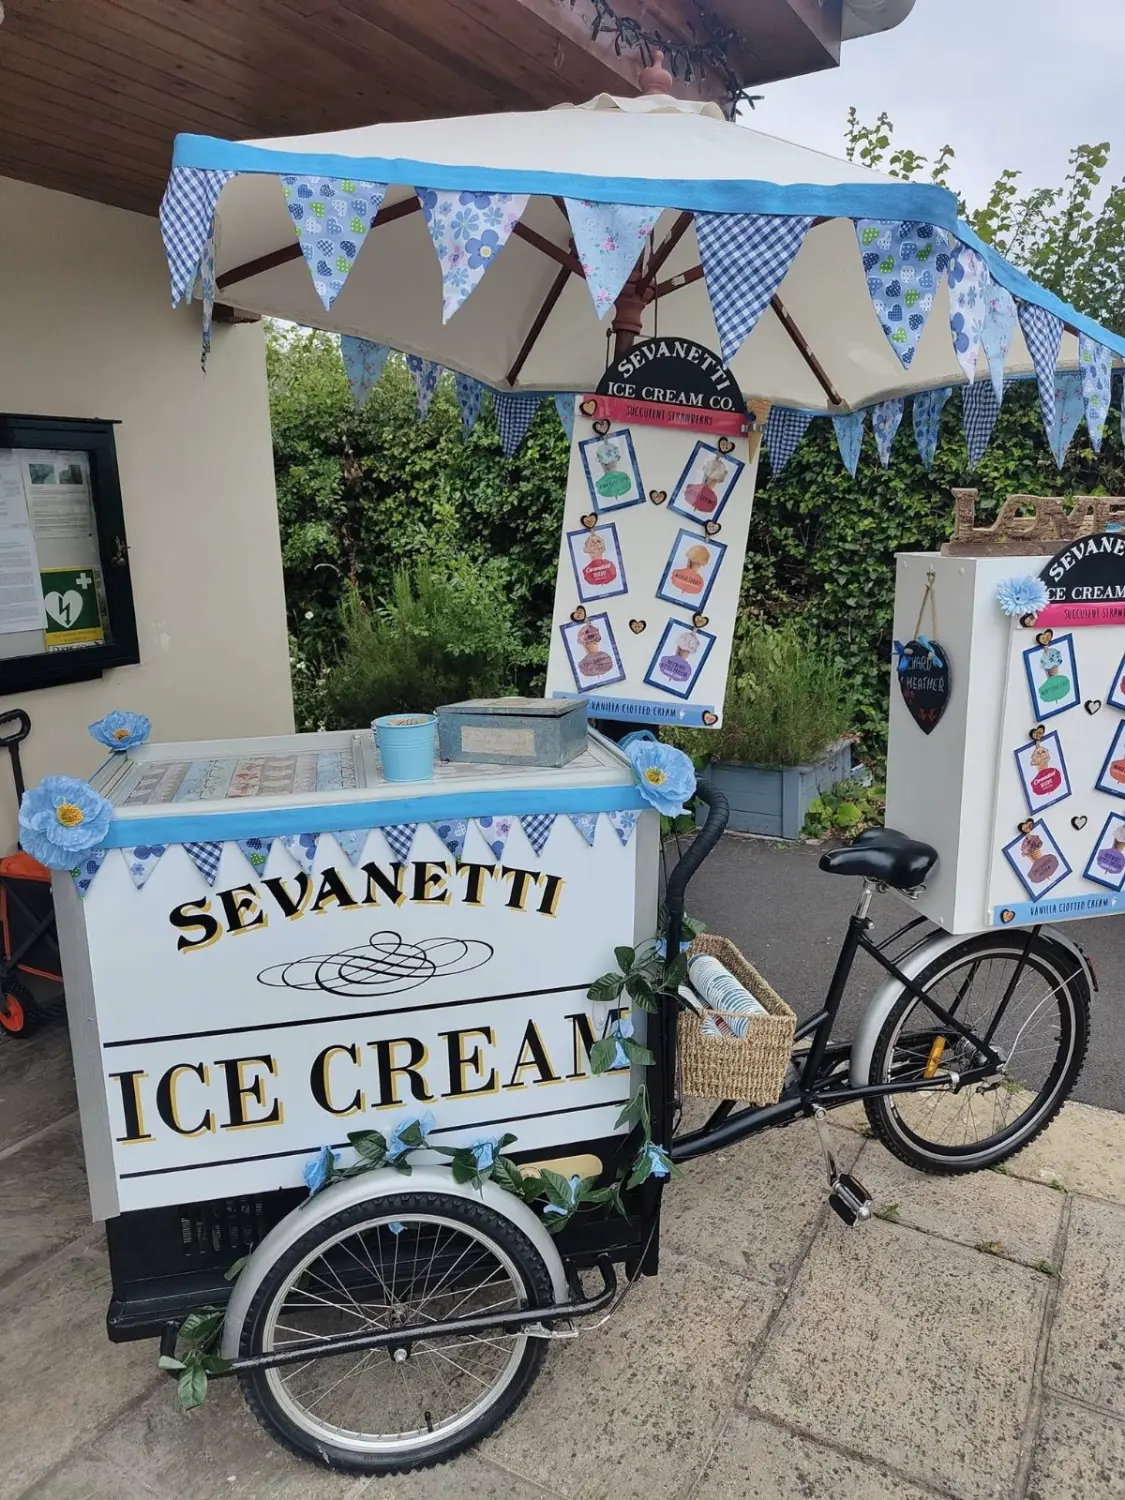 Sevanetti Ice Cream Bikes pale blue decoration sets